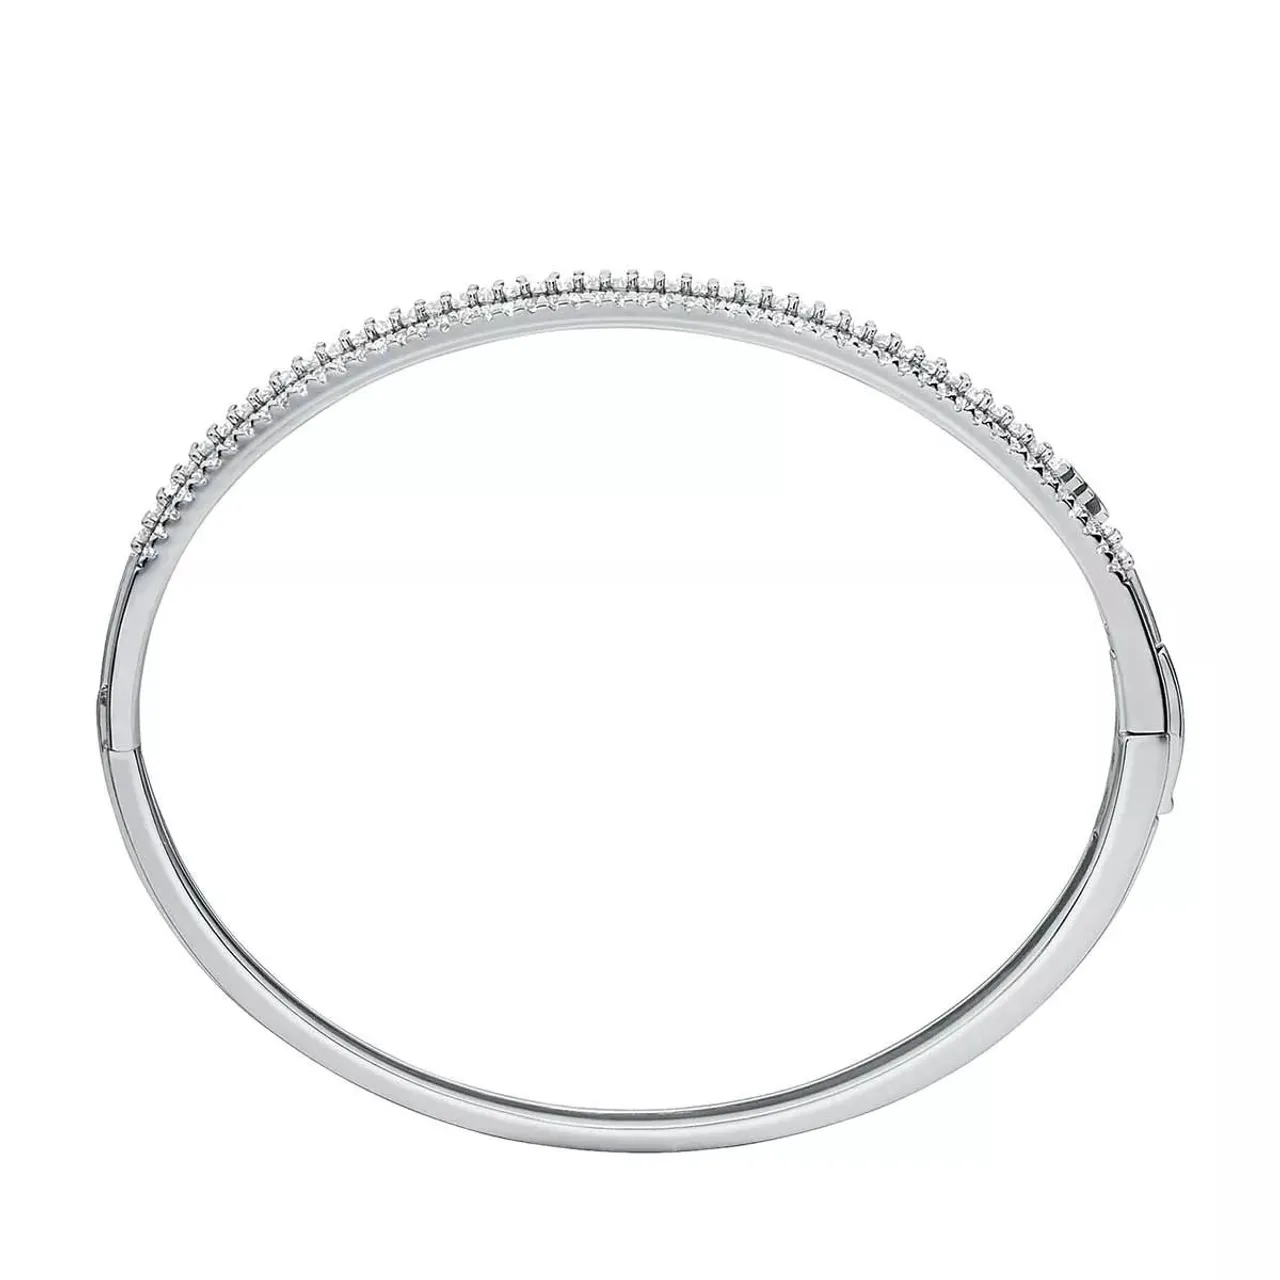 Michael Kors Bracelets - Sterling Silver Tapered Baguette and Pavé Bangle B - silver - Bracelets for ladies